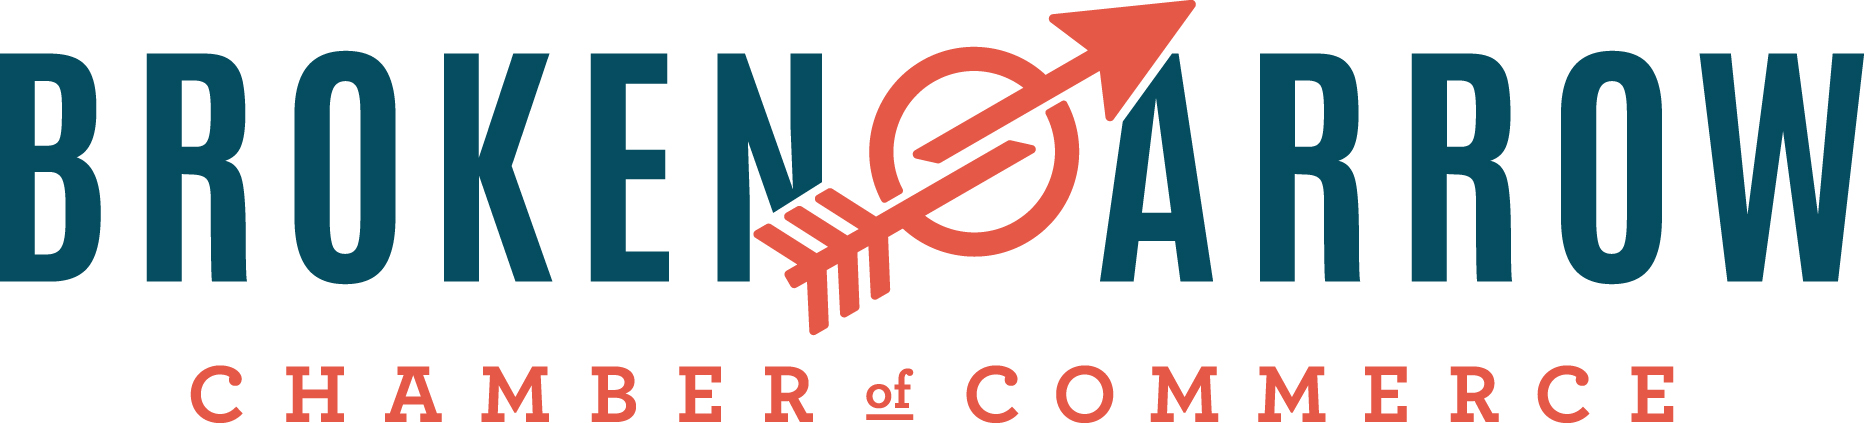 Broken Arrow Chamber of Commerce company logo